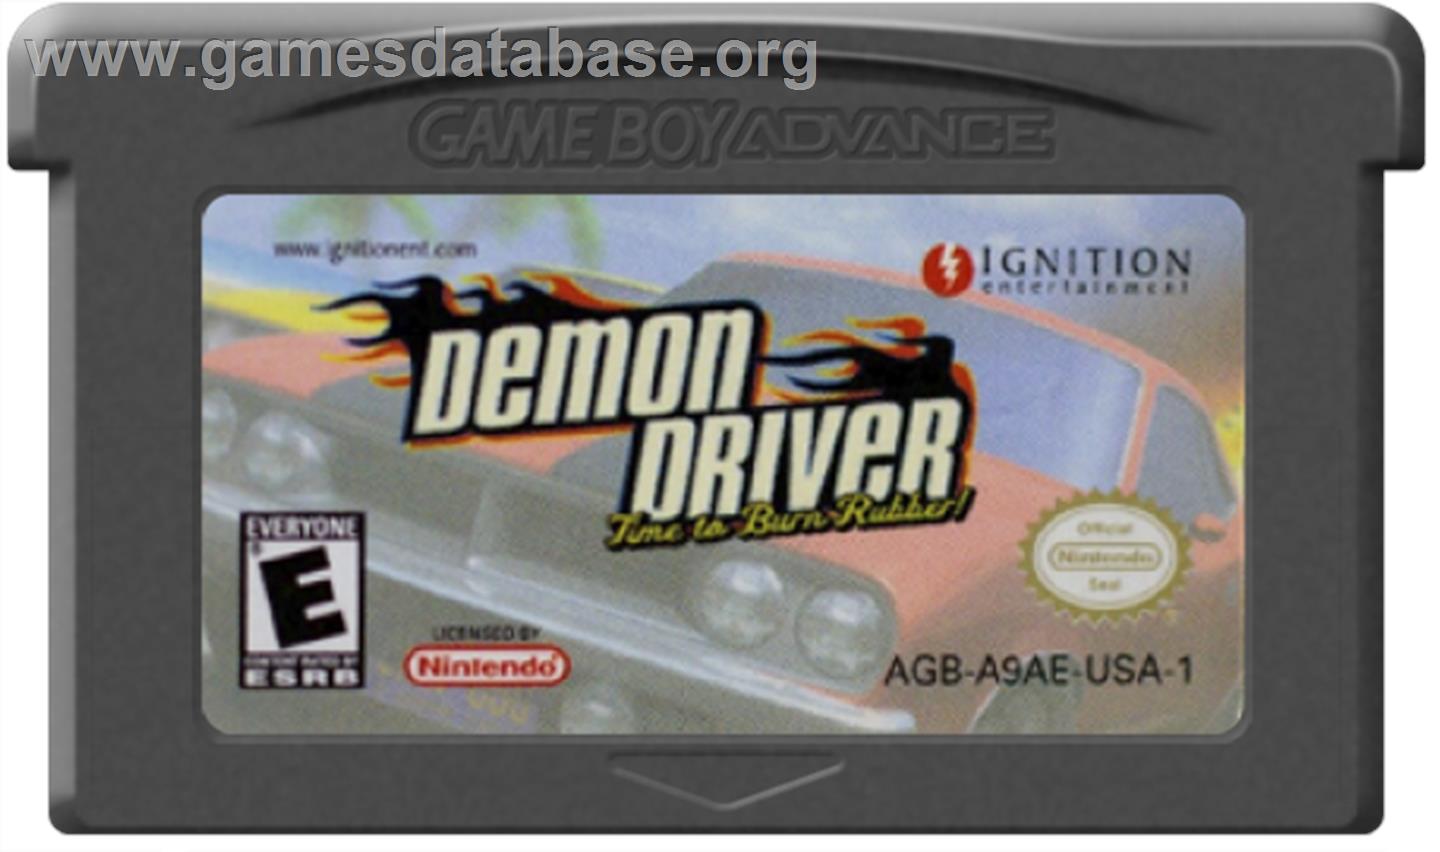 Demon Driver: Time to Burn Rubber - Nintendo Game Boy Advance - Artwork - Cartridge